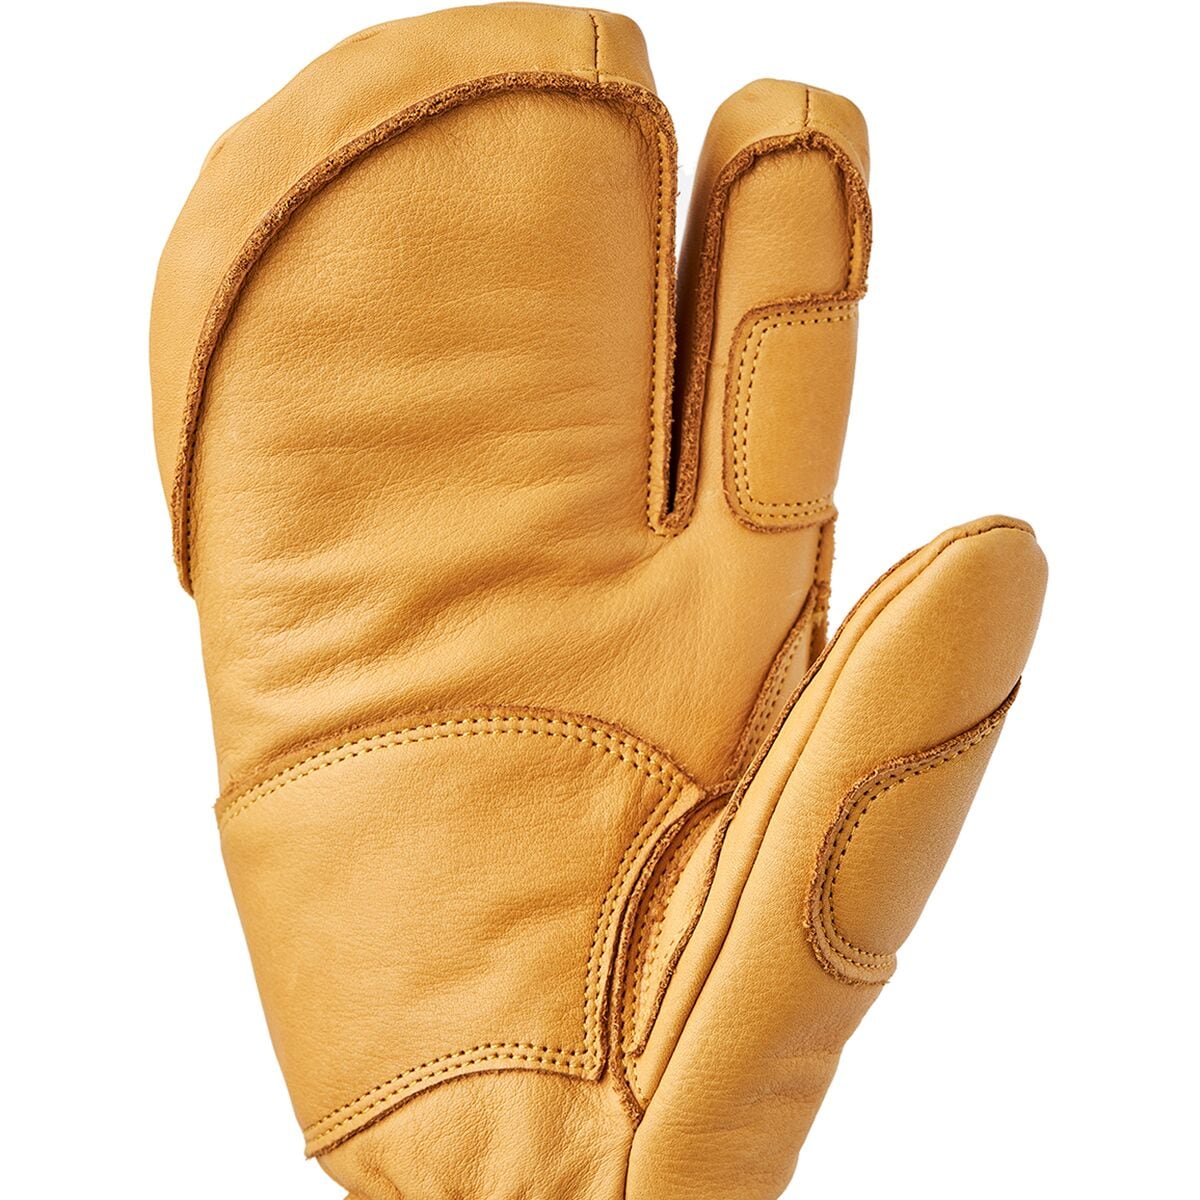 Hestra Gloves Vertical Cut C Zone 3 Finger Unisex Ski Glove In Black 